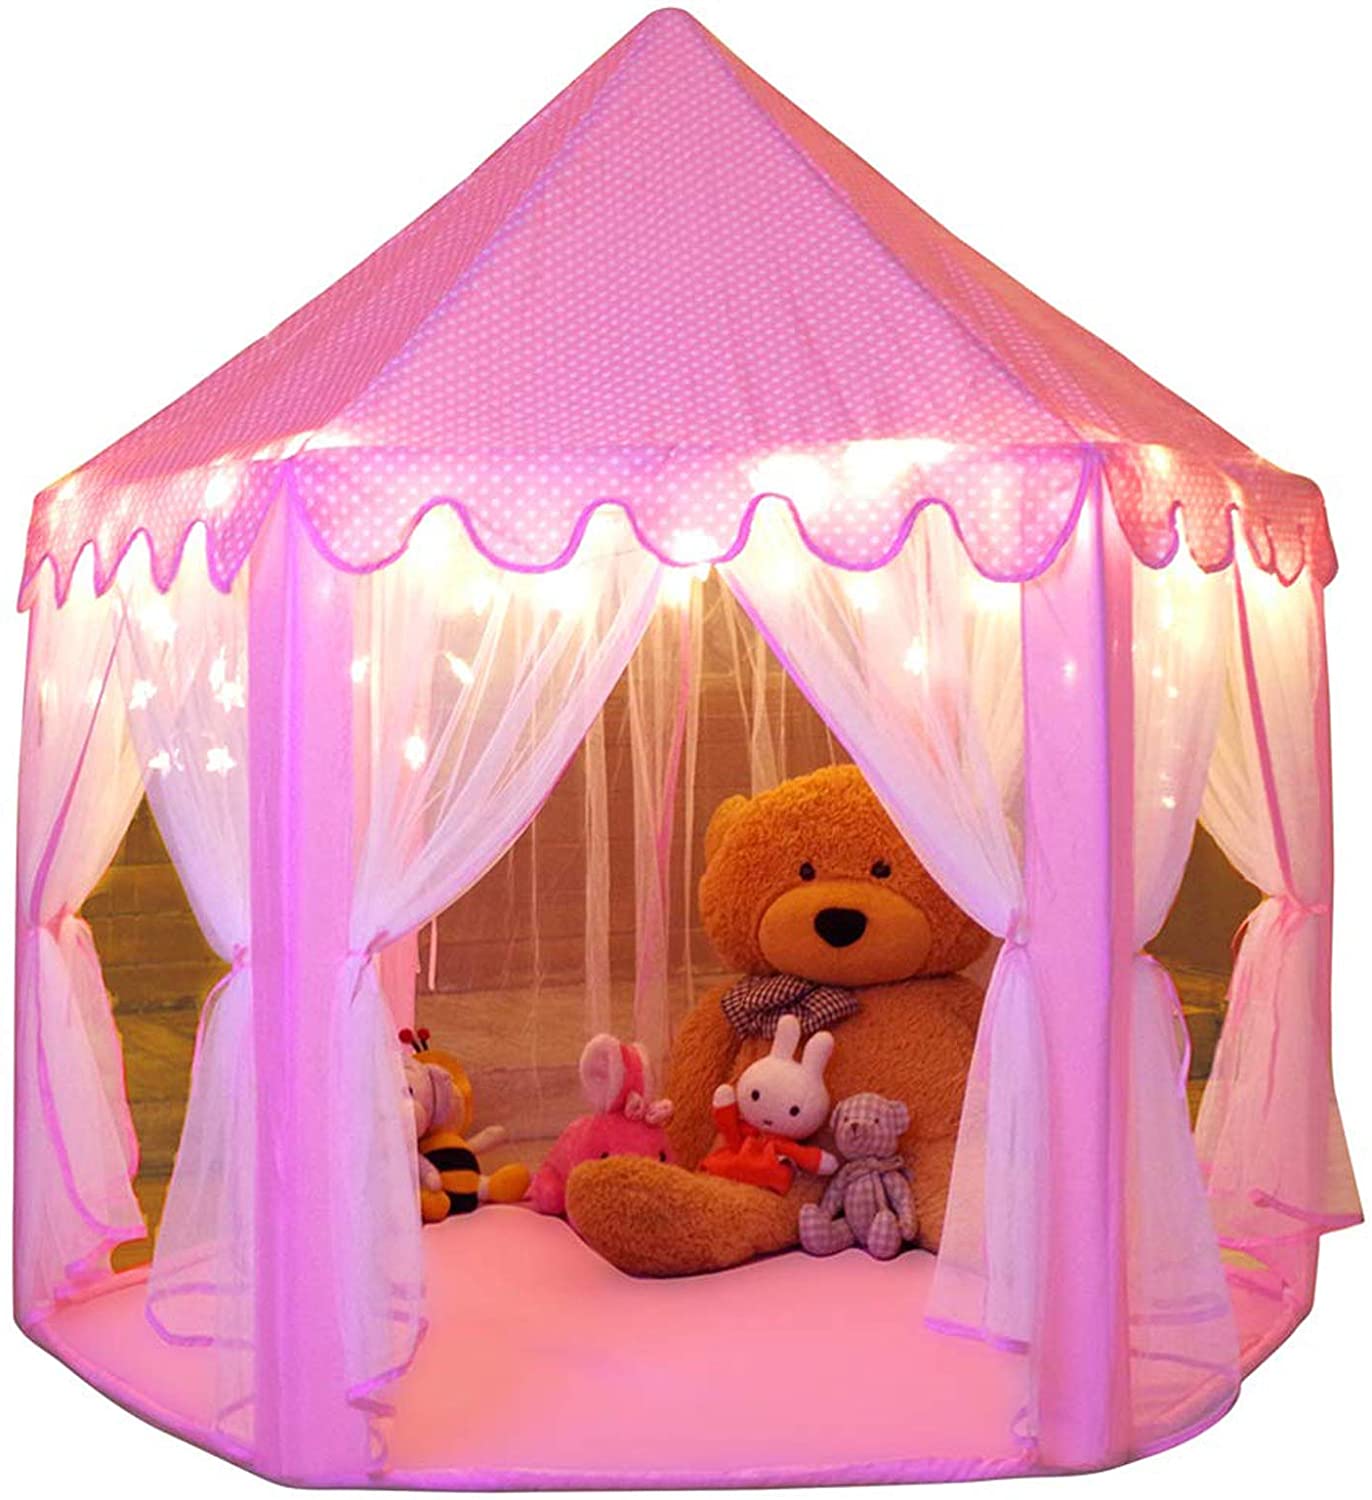 Monobeach Bedroom Canopy Tent Little Girls’ Toys